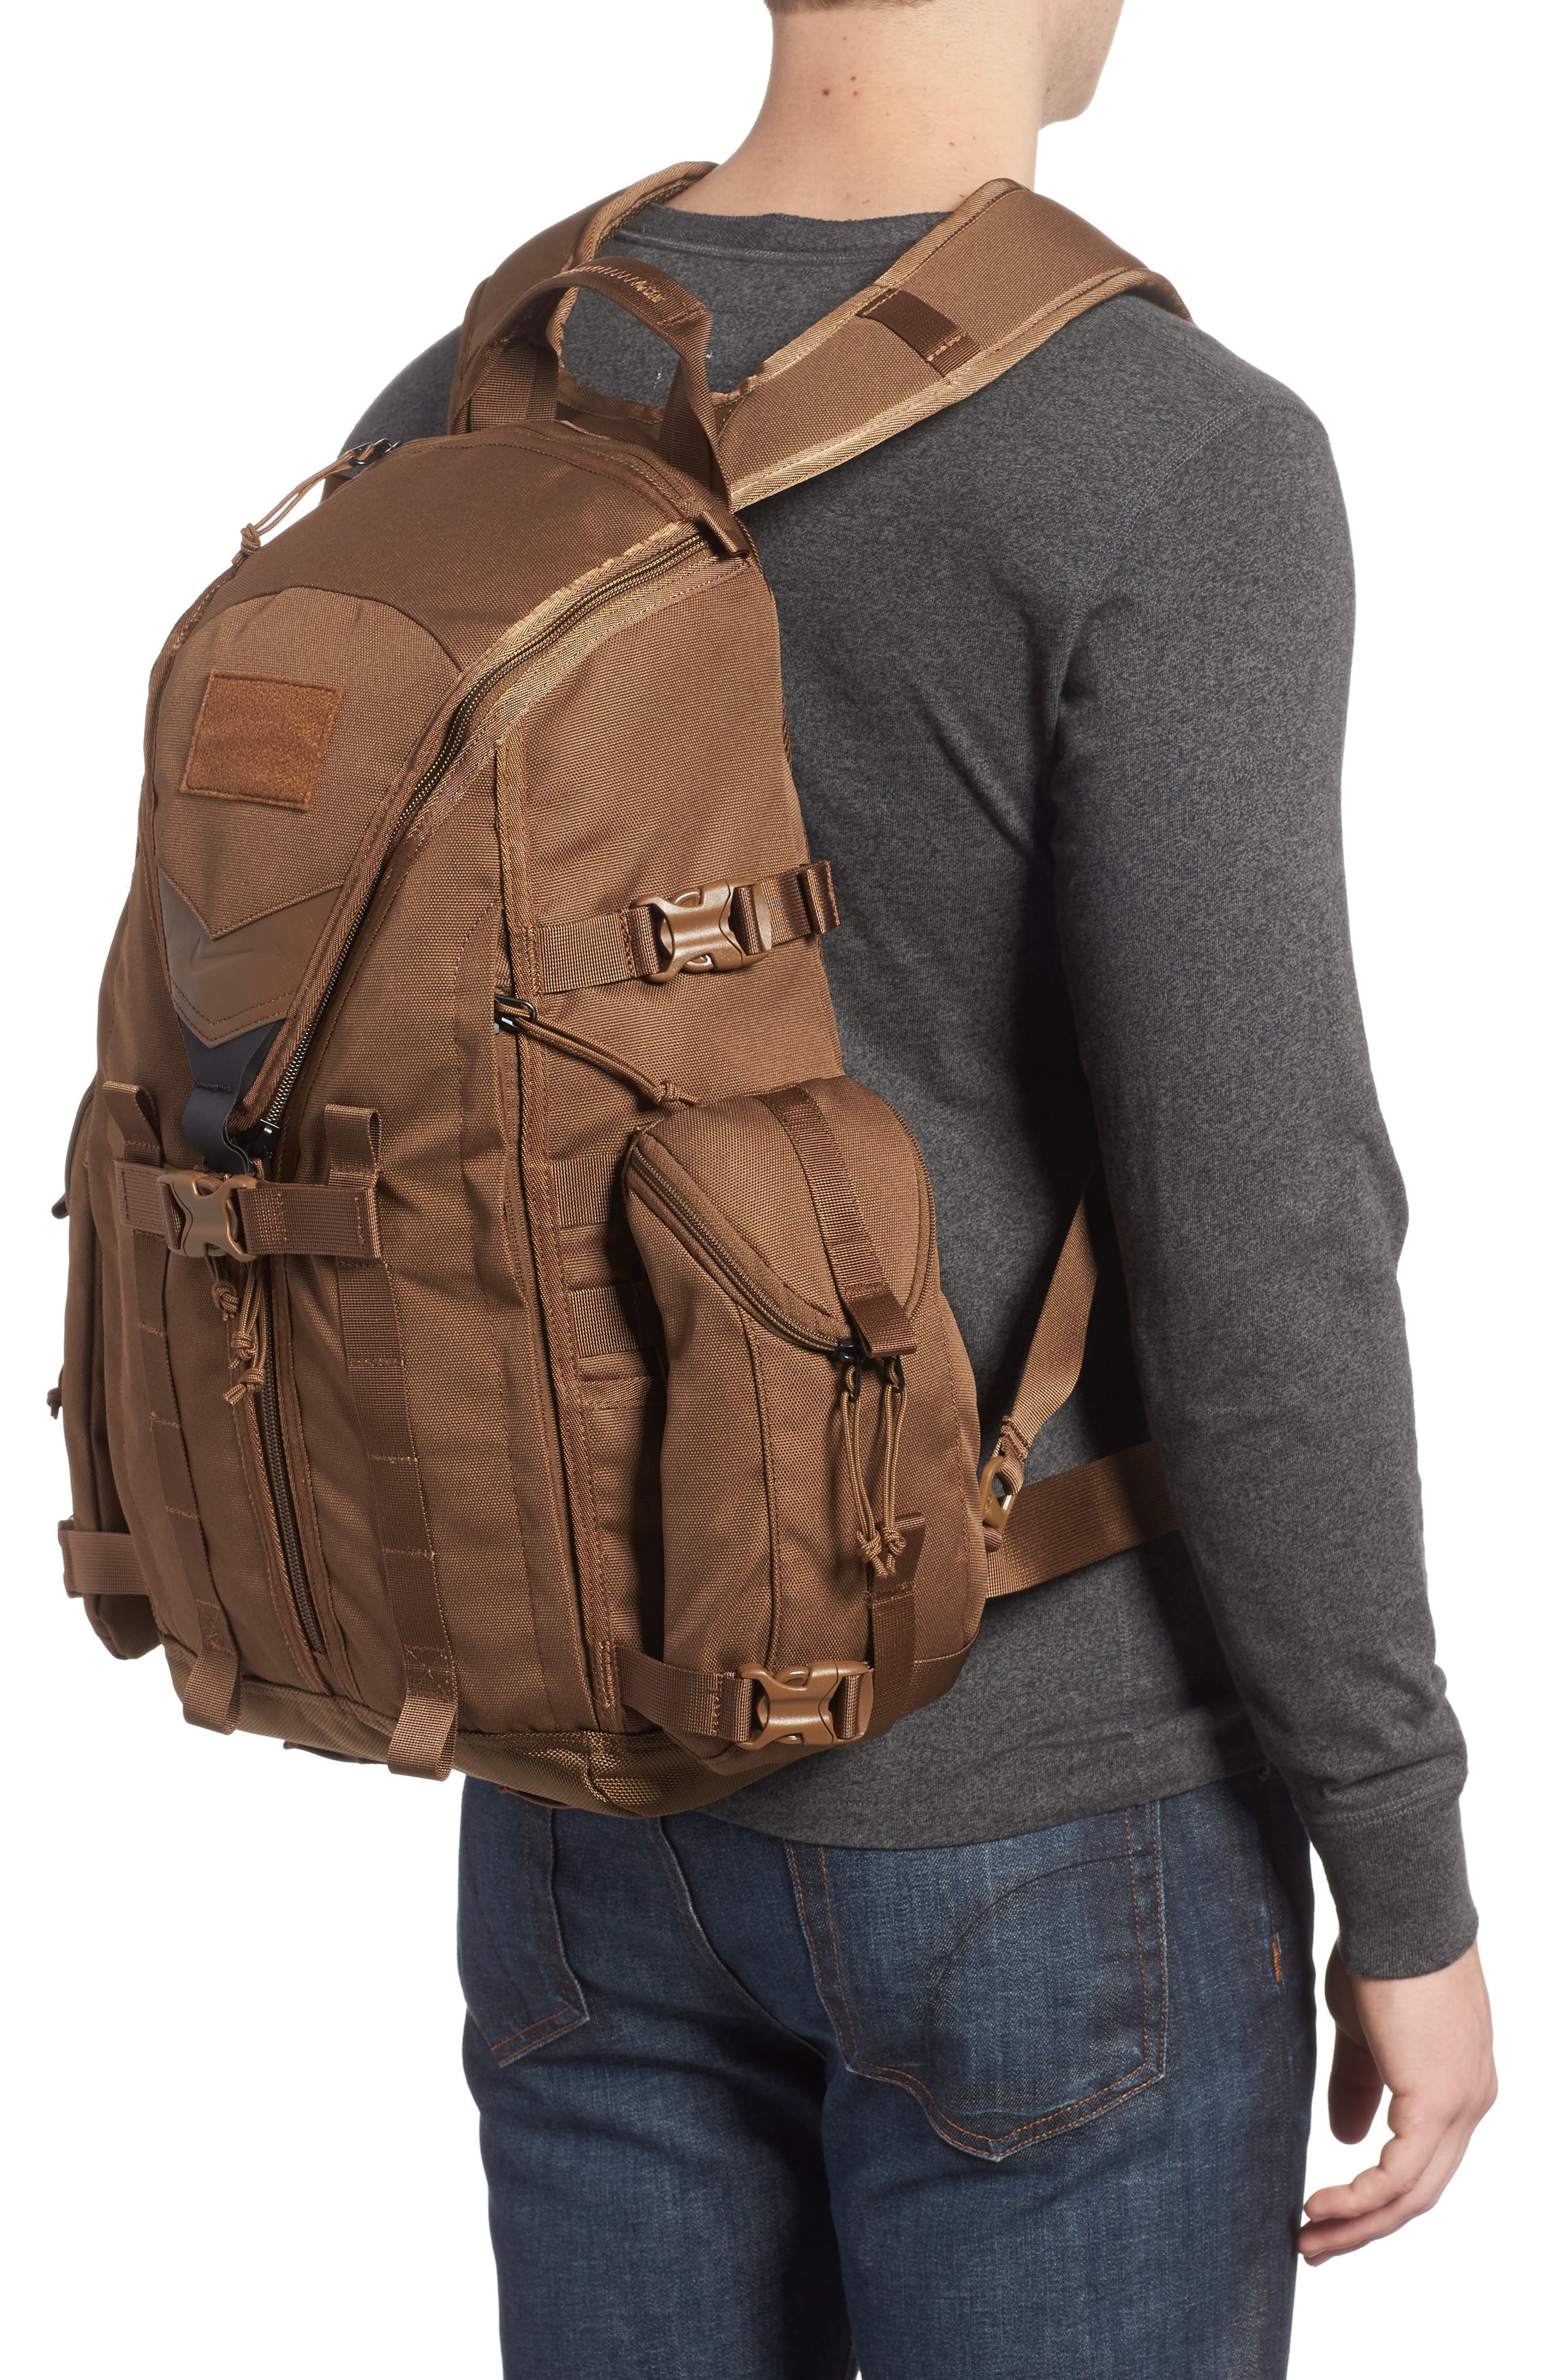 sfs responder backpack